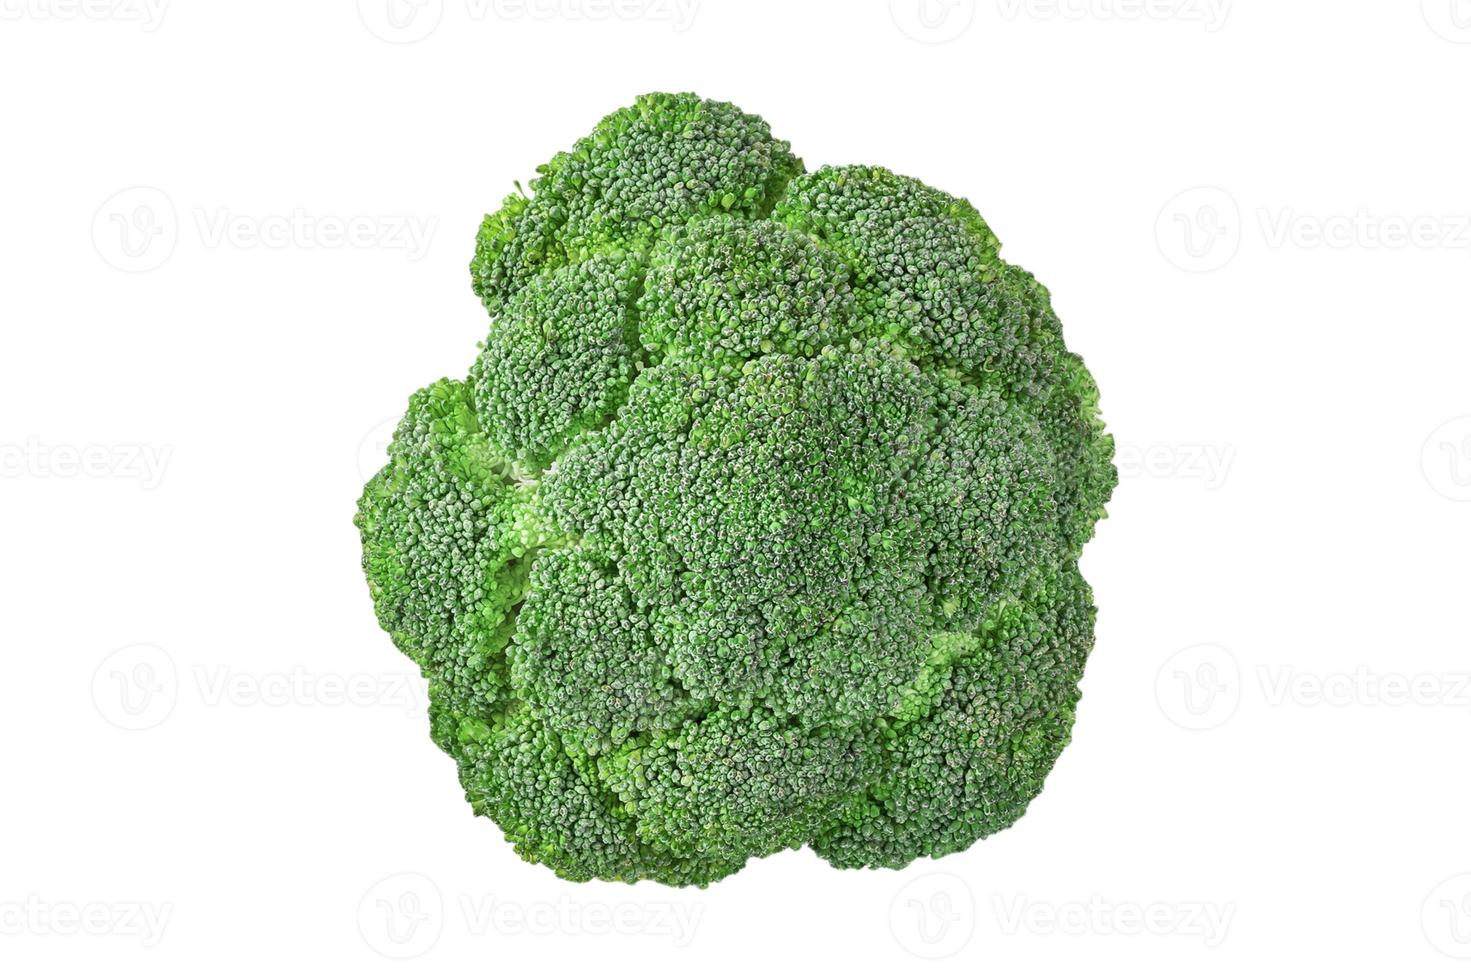 3135 verdure broccoli isolato su un' trasparente sfondo foto